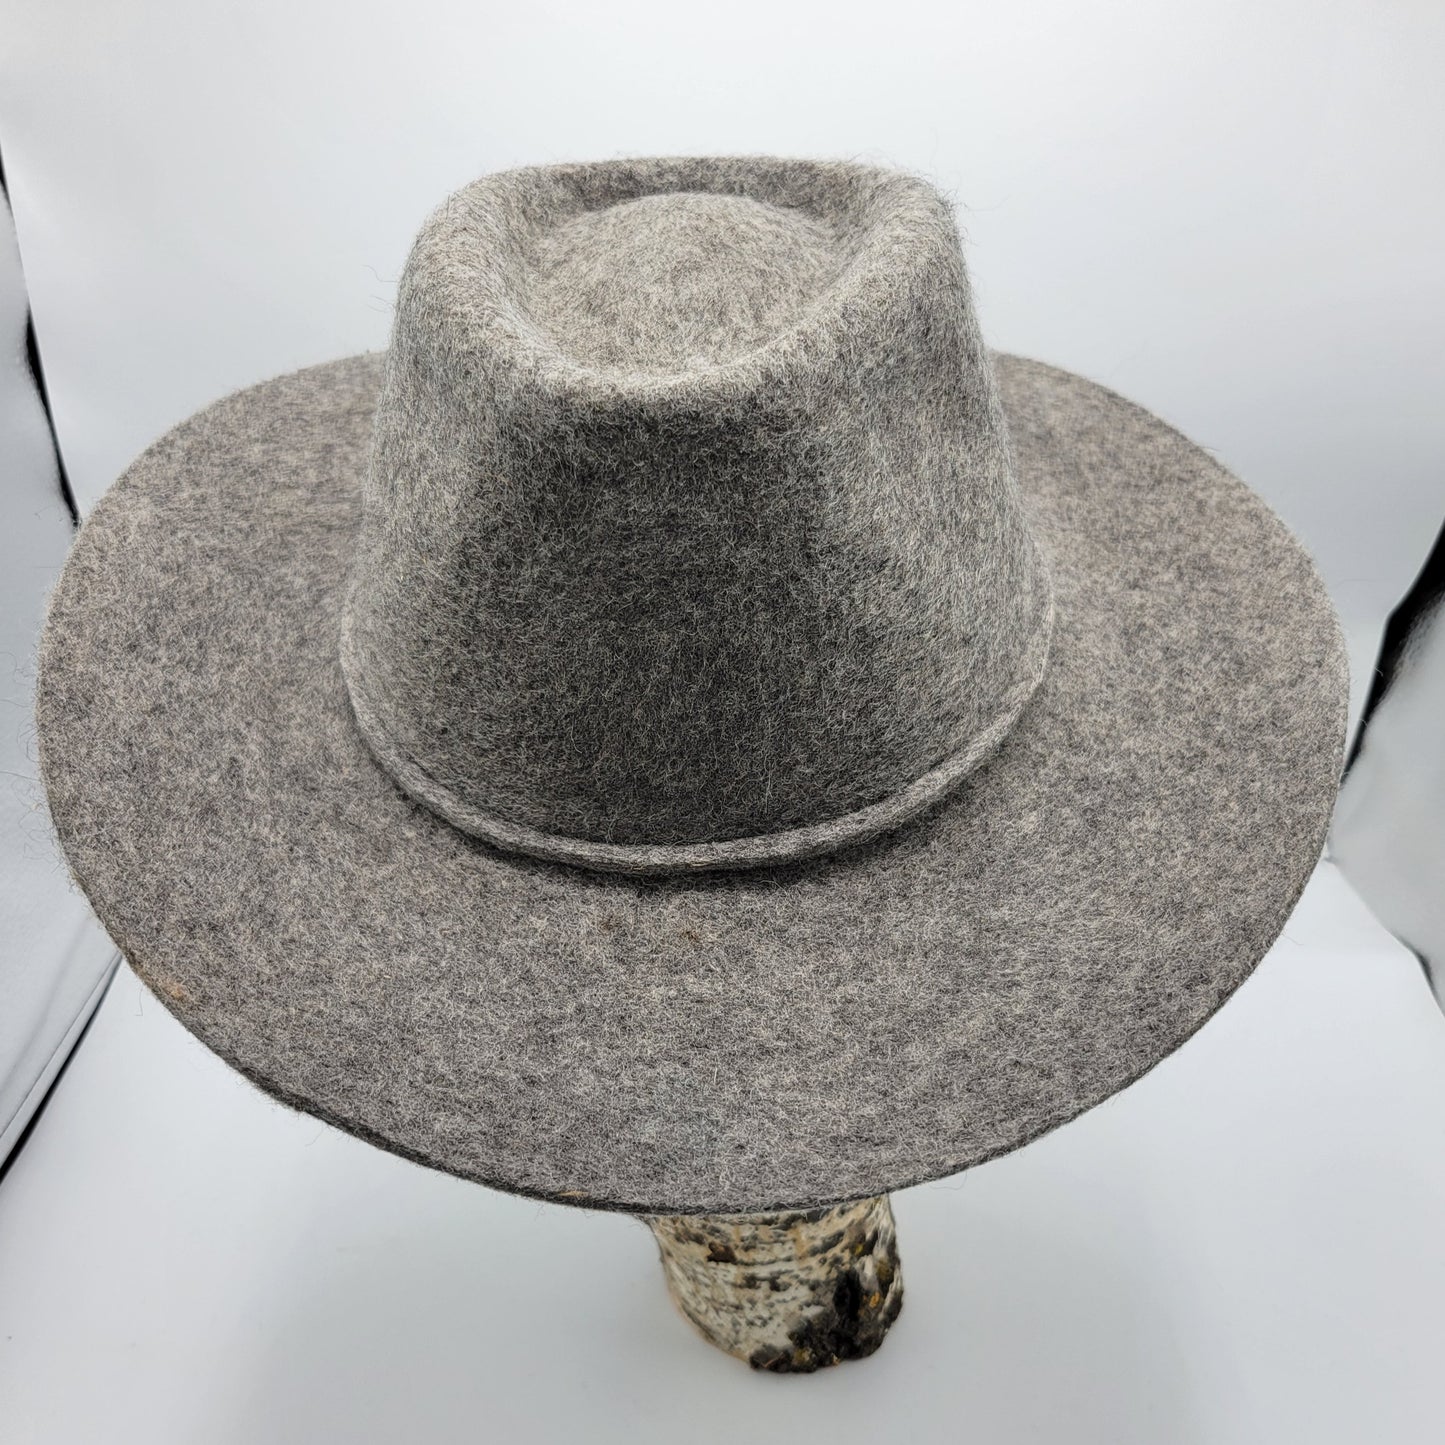 Felted Cowboy hats